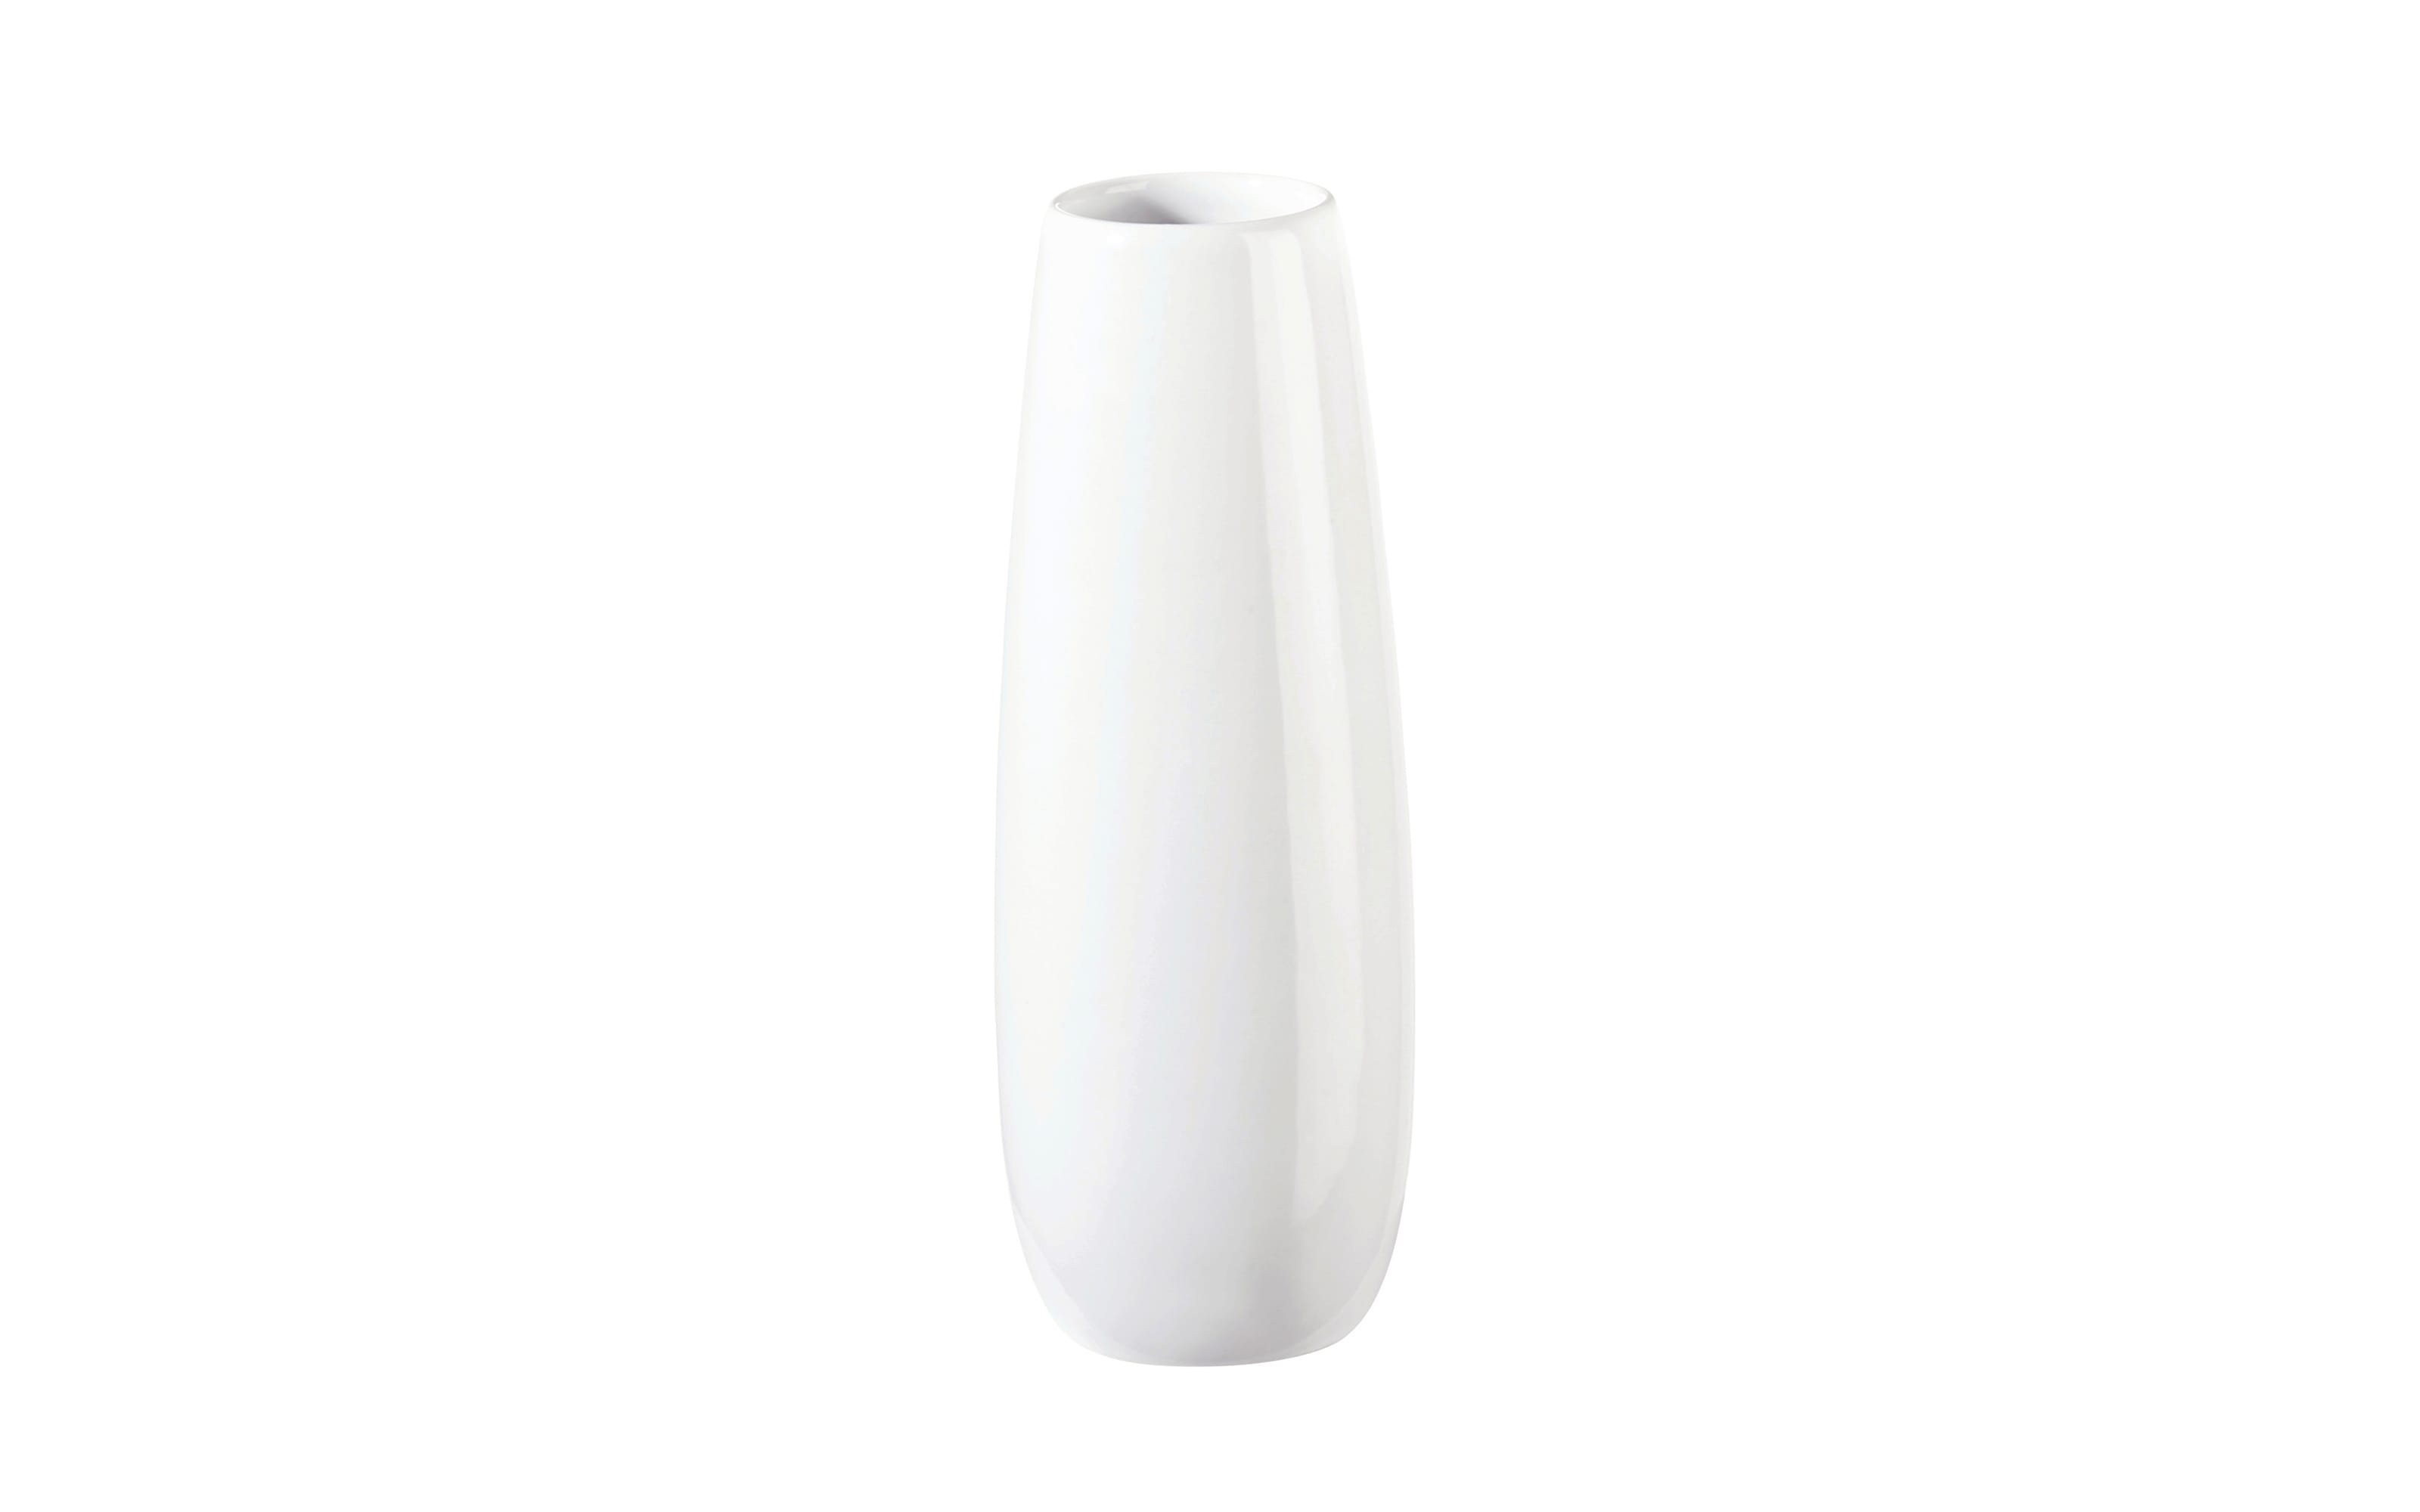 Vase ease weiß, 8 cm